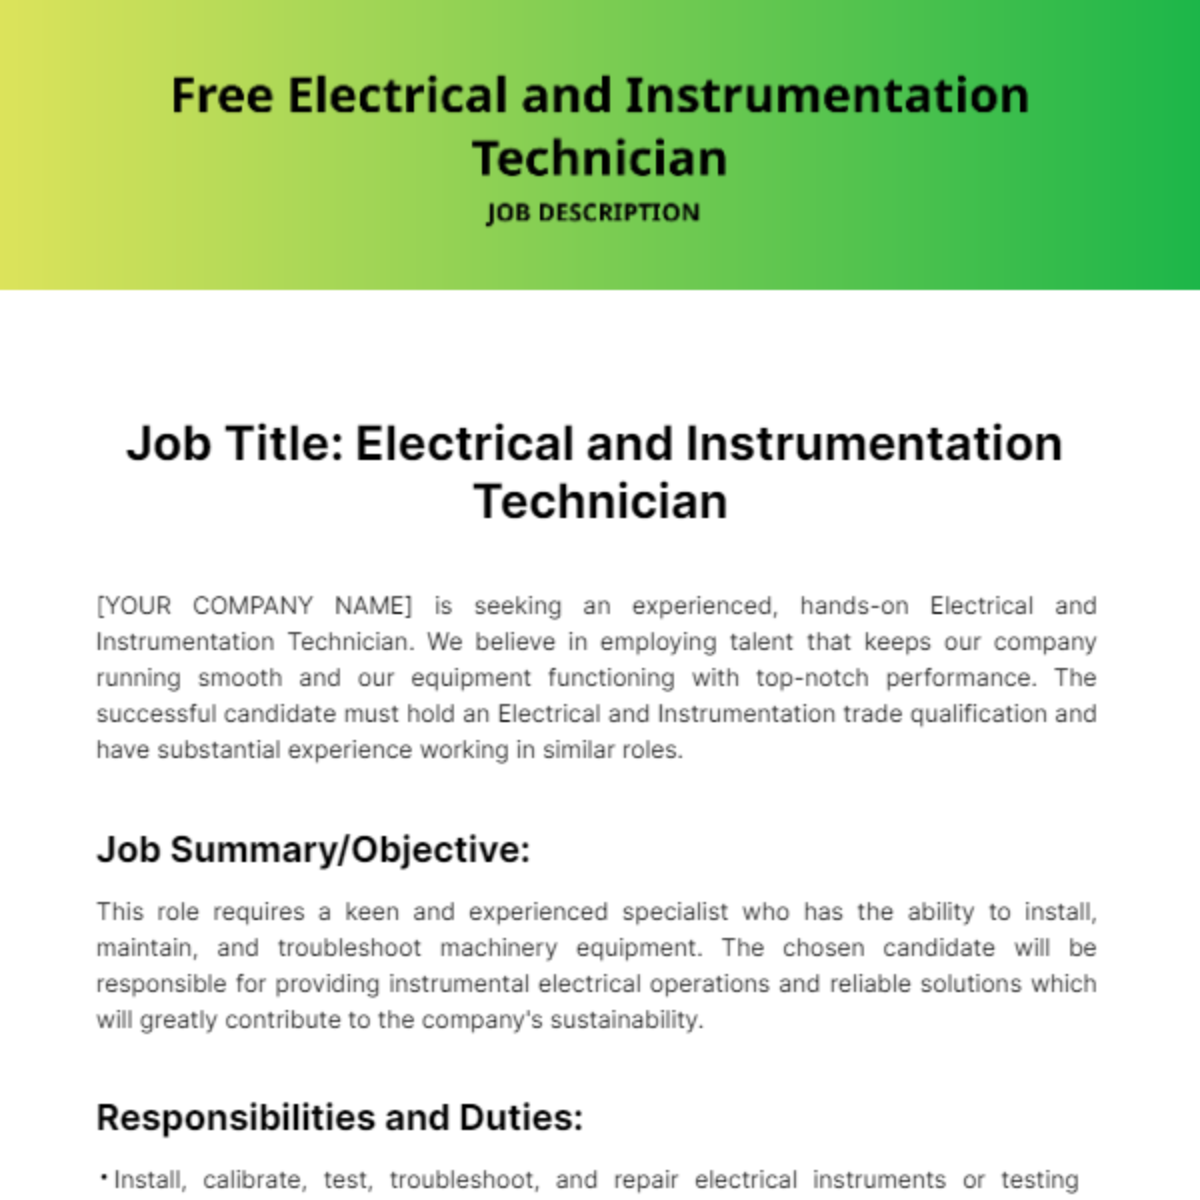 Free Electrical and Instrumentation Technician Job Description Template